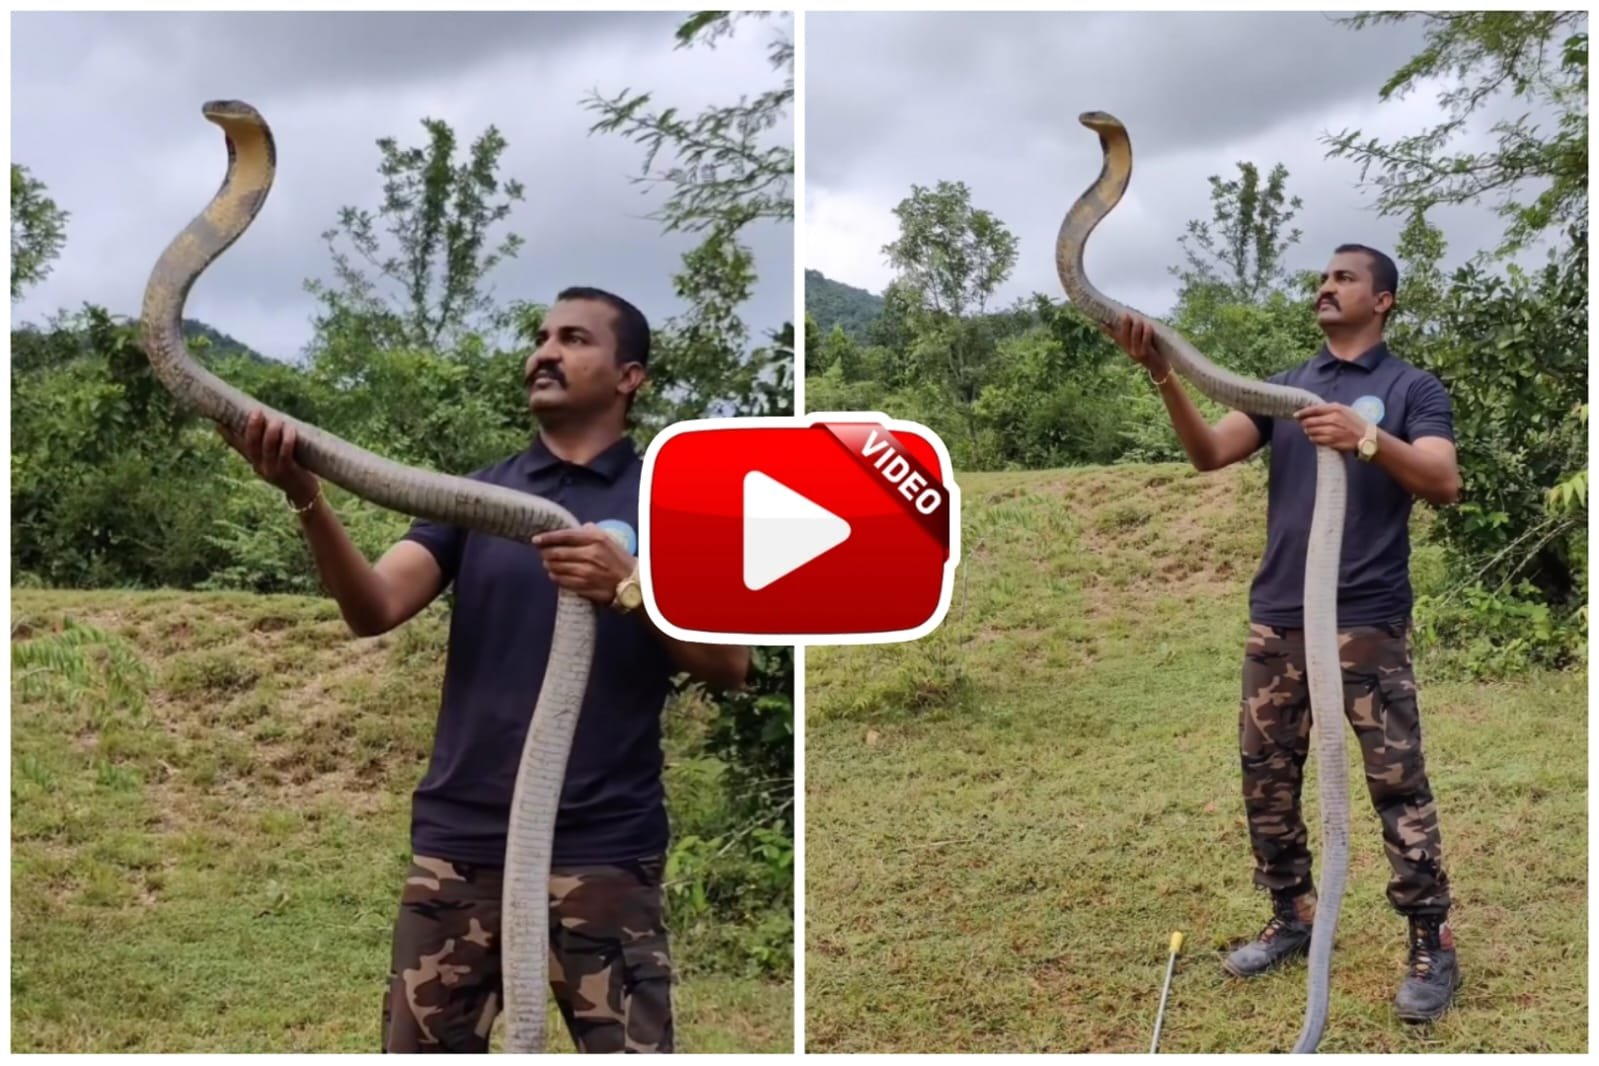 King Cobra Ka Video - A man was seen balancing a giant King Cobra snake in his hands.